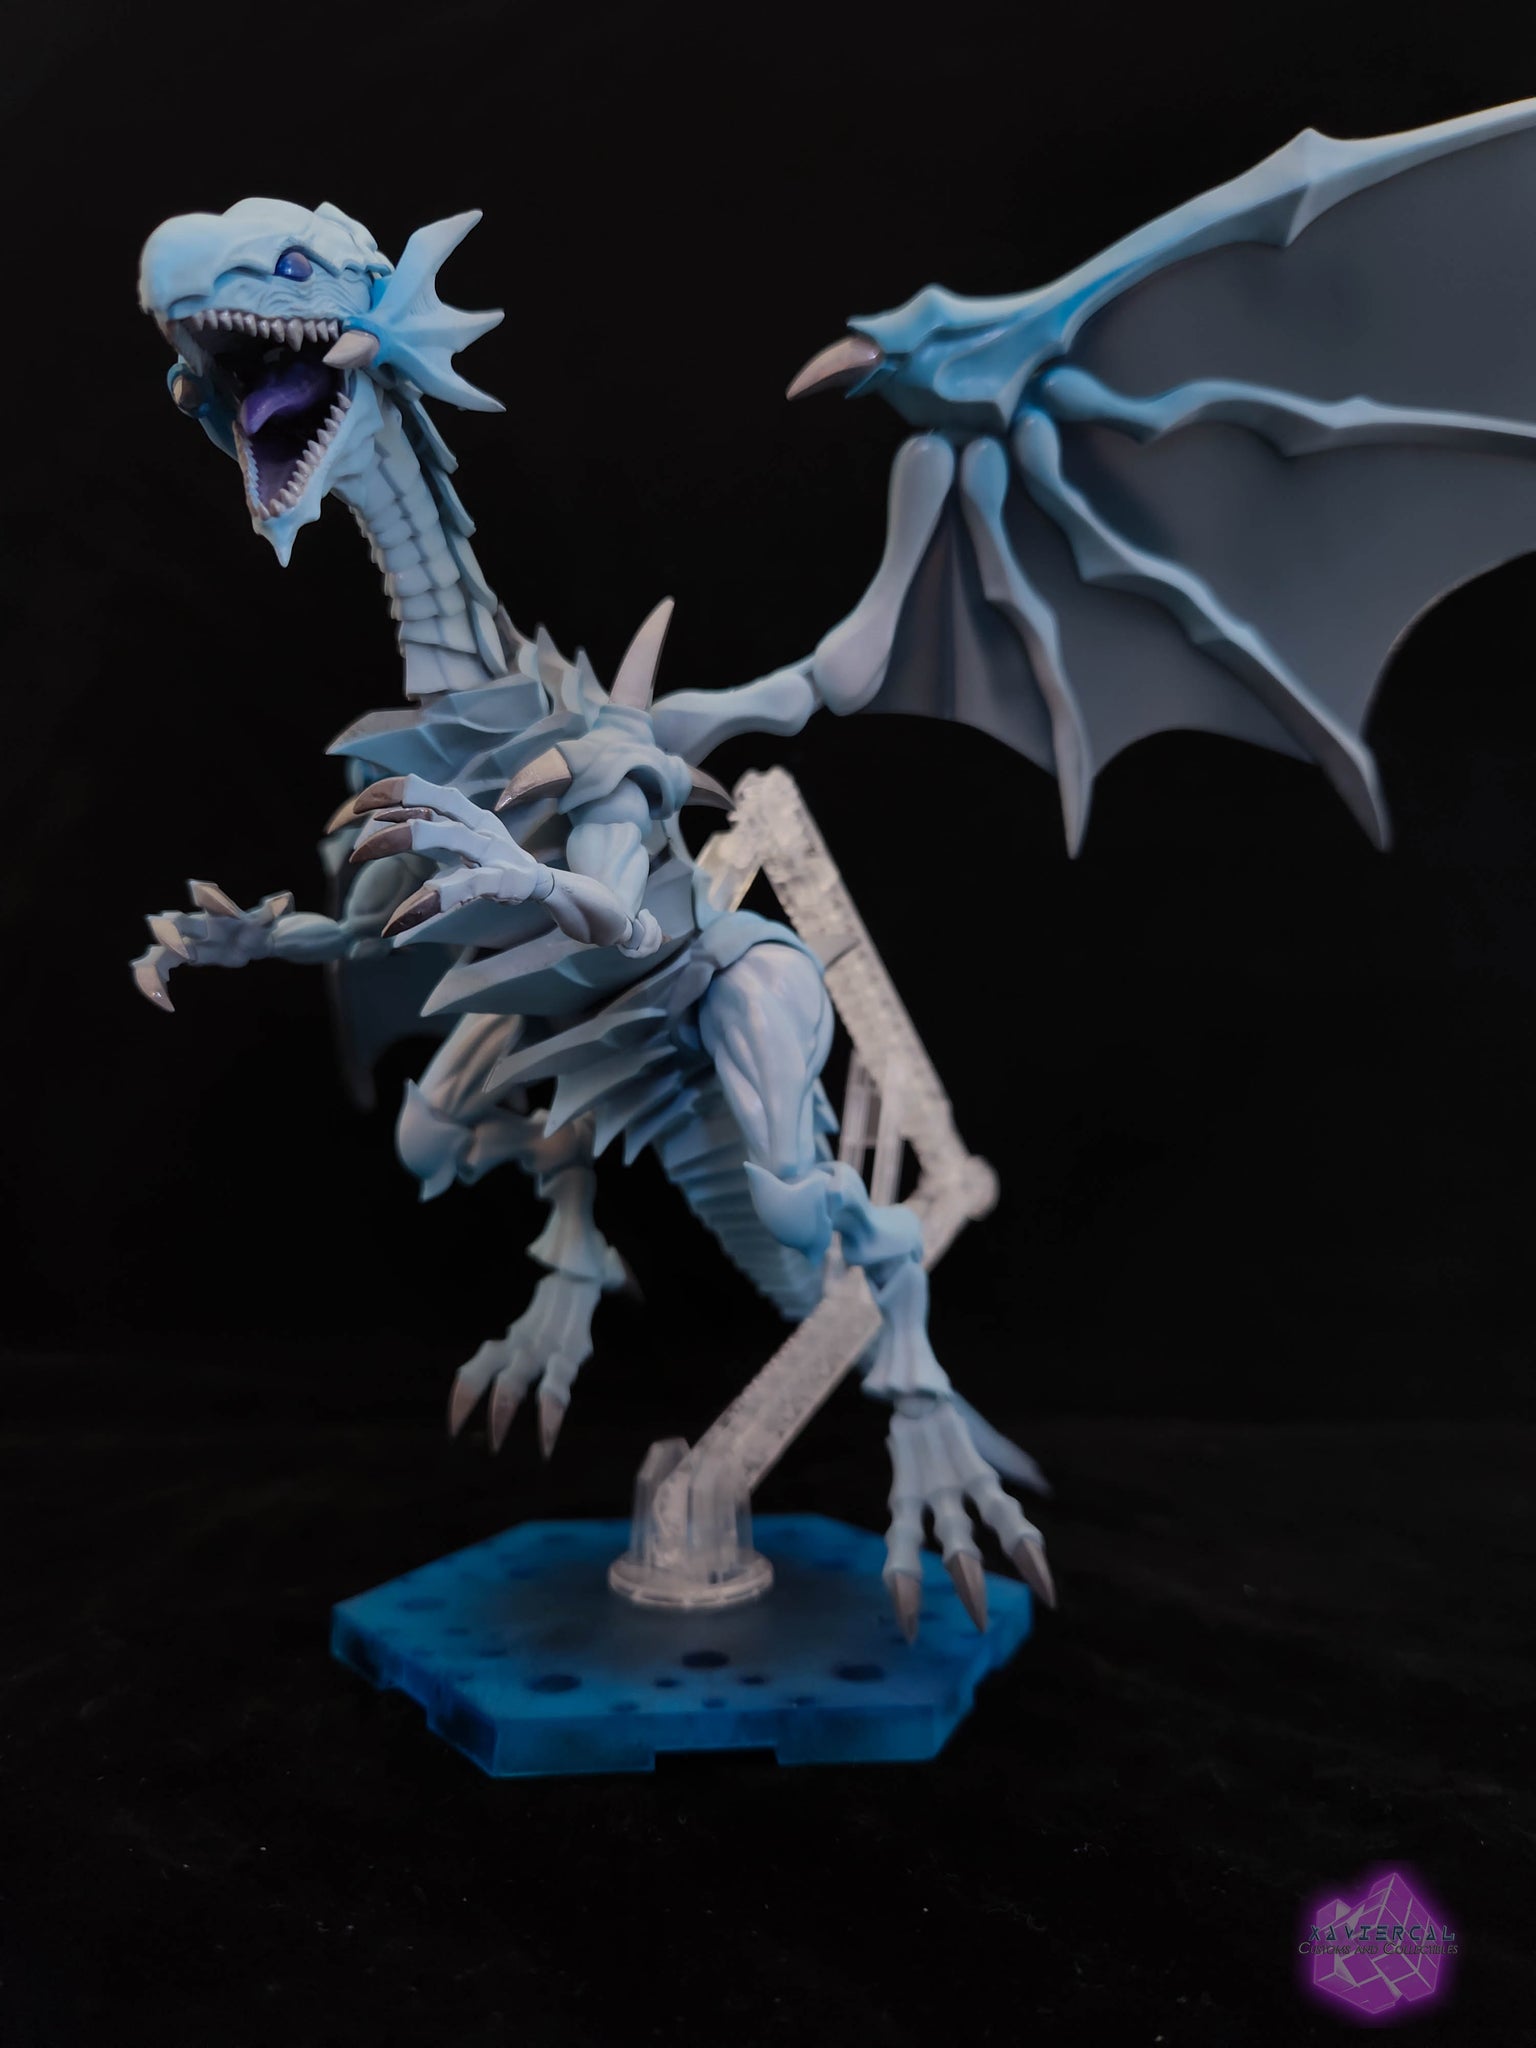 Yu-Gi-Oh! Figure-Rise Standard Amplified Blue-Eyes White Dragon